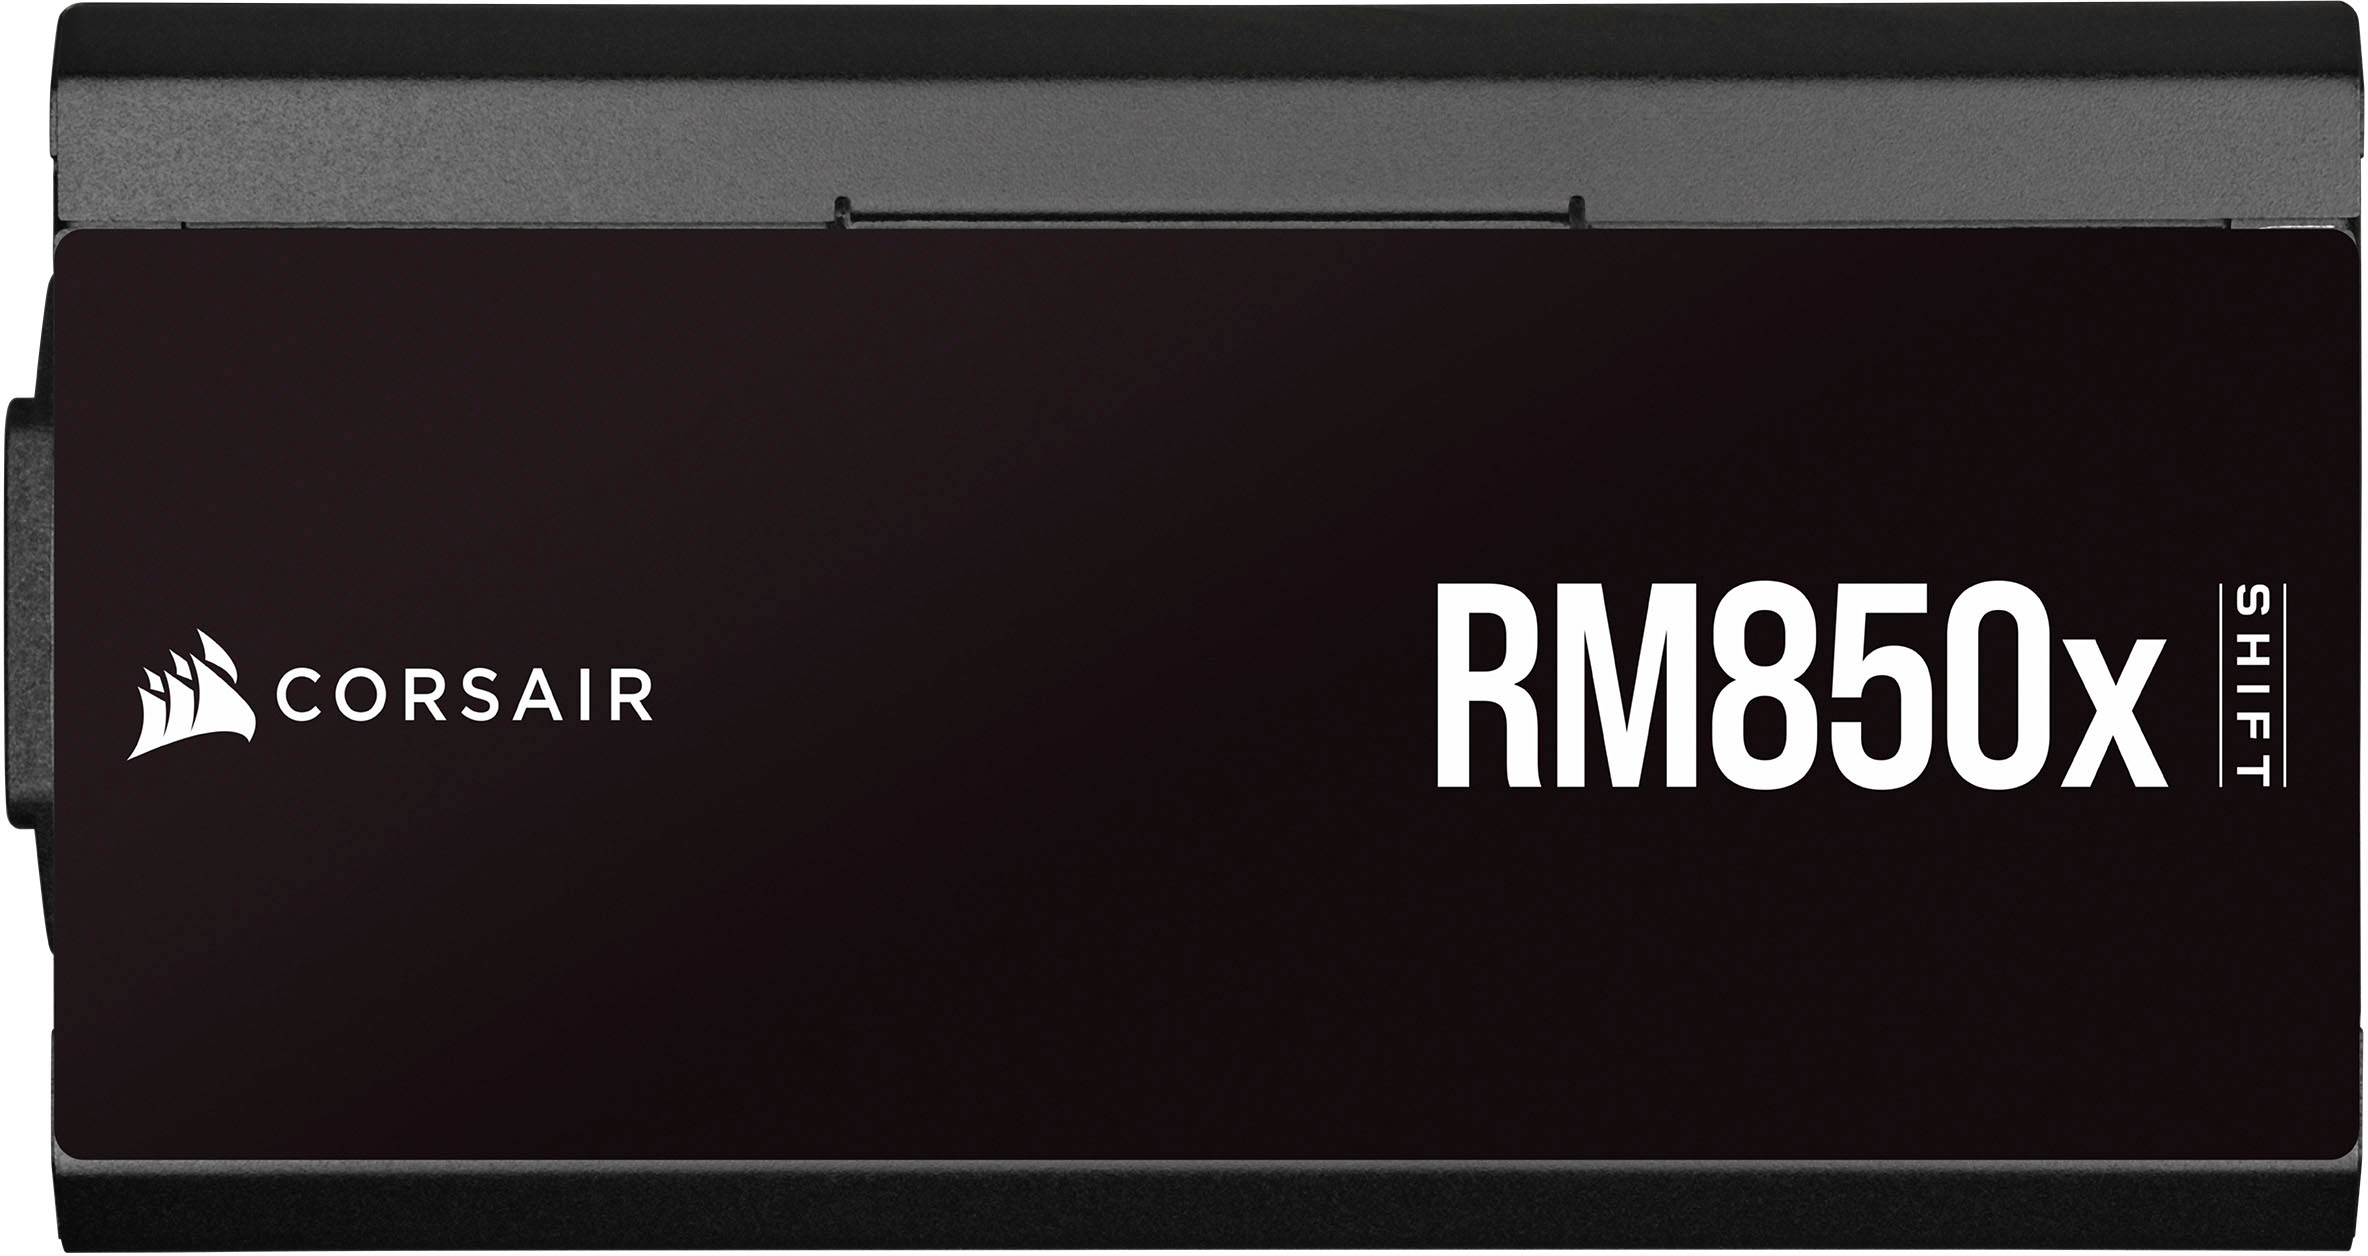  Corsair RM850x 80 Plus Gold, 850 Watts, Fully Modular ATX Power  Supply Unit - Black : Electronics